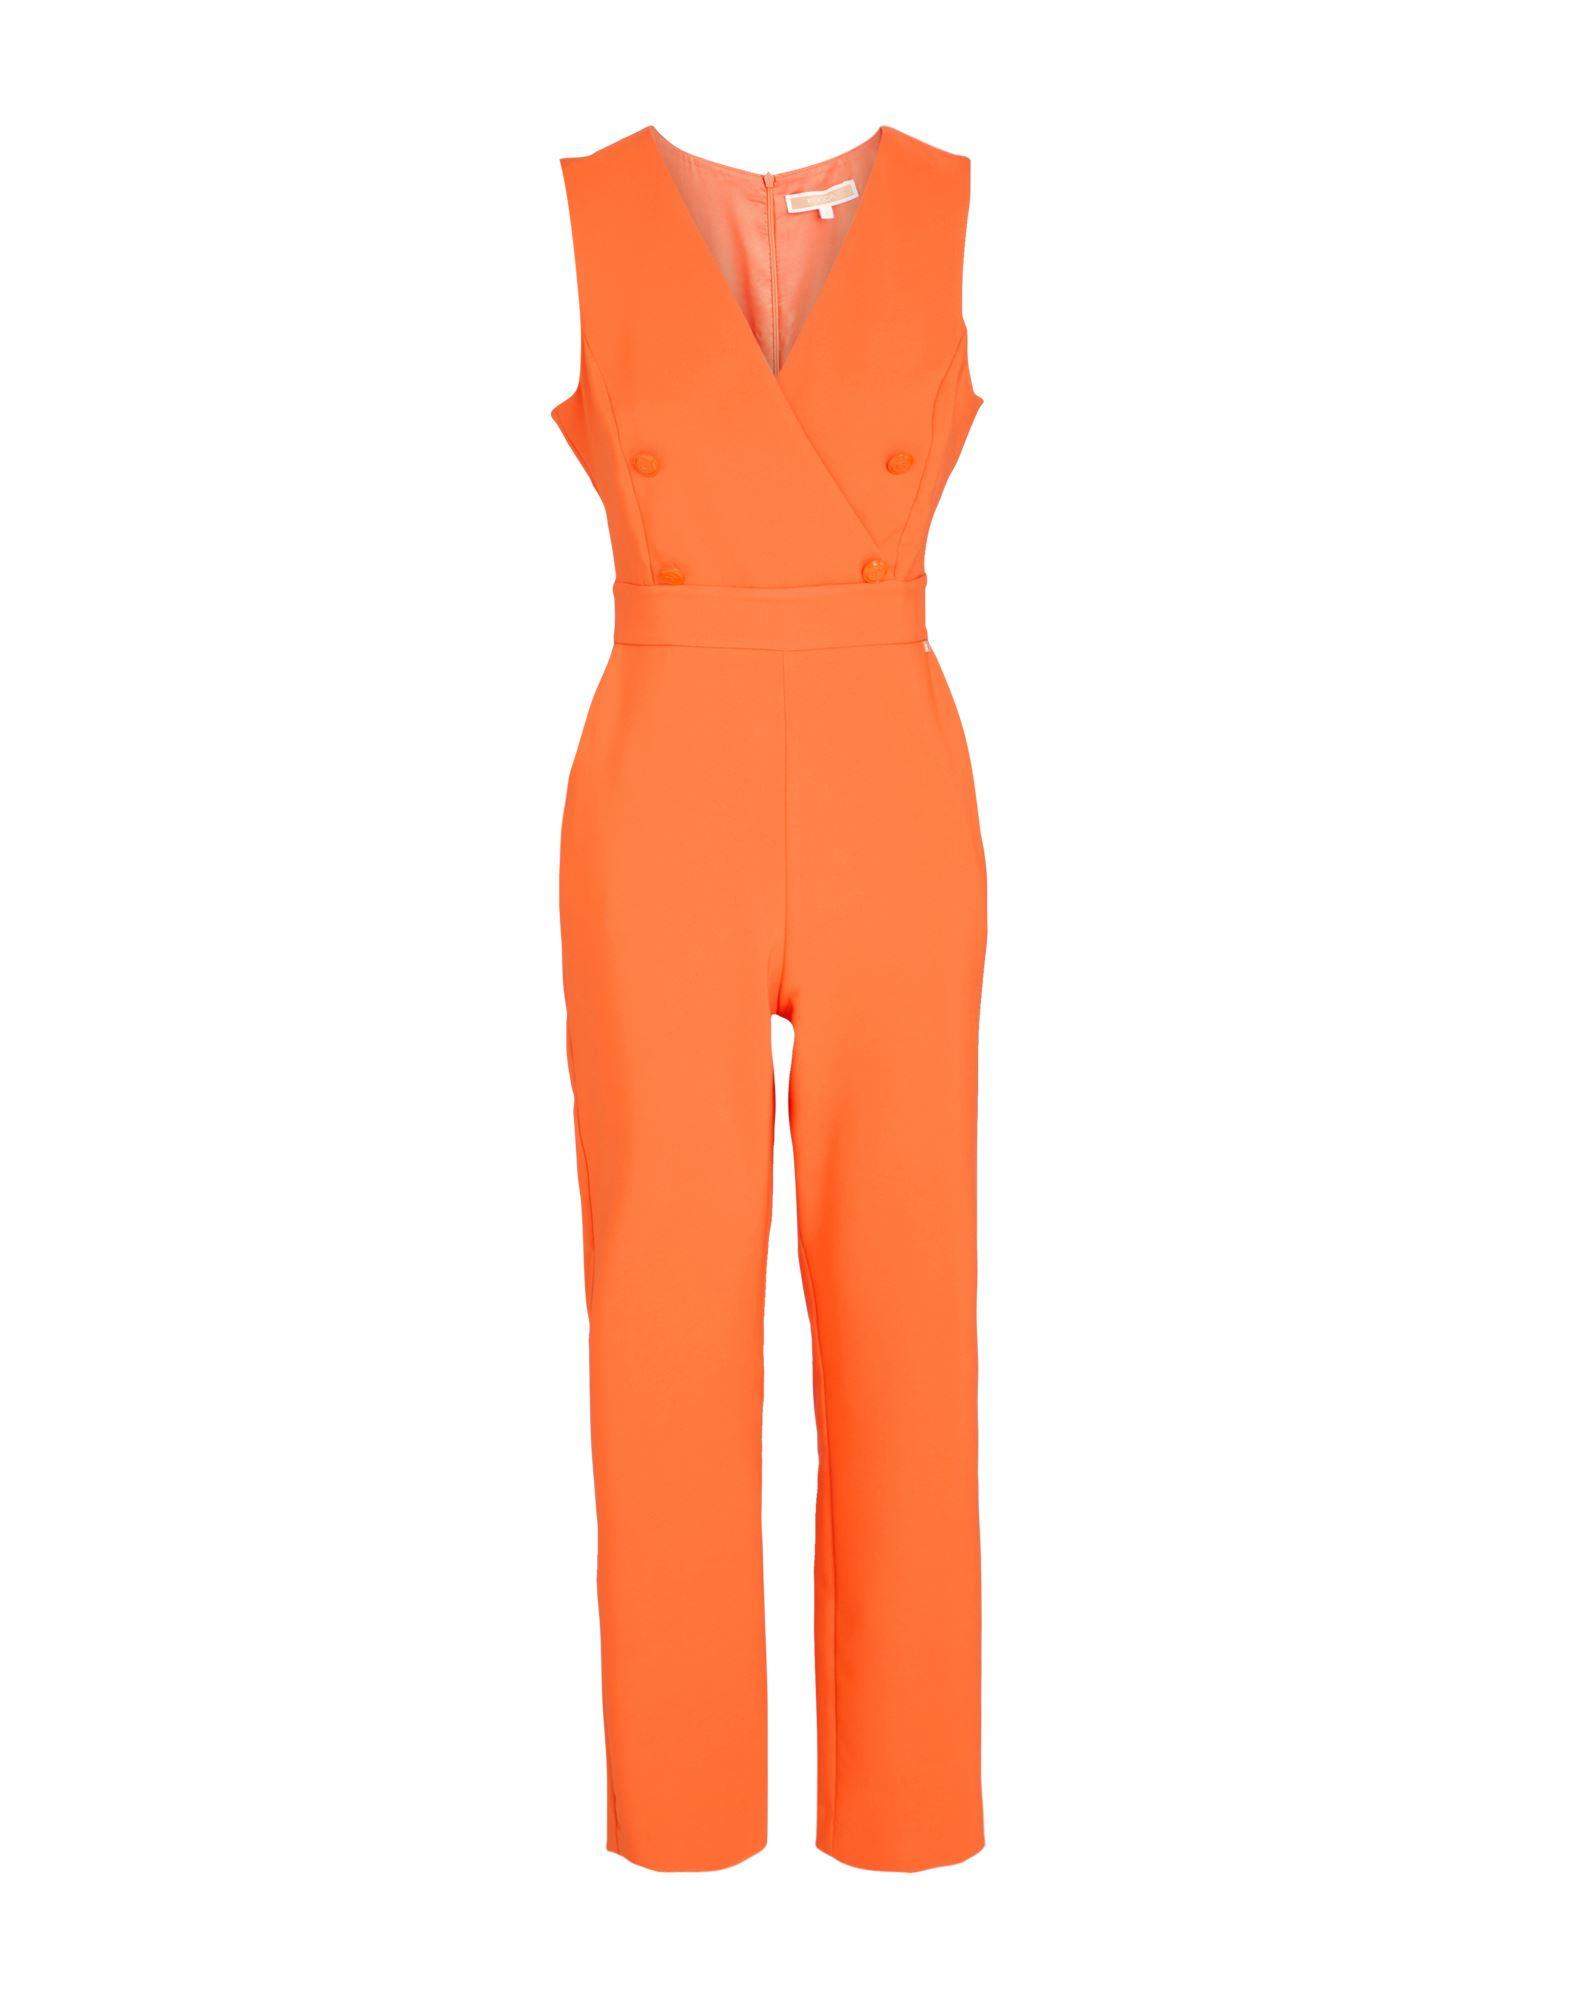 Kocca Jumpsuit in Orange | Lyst